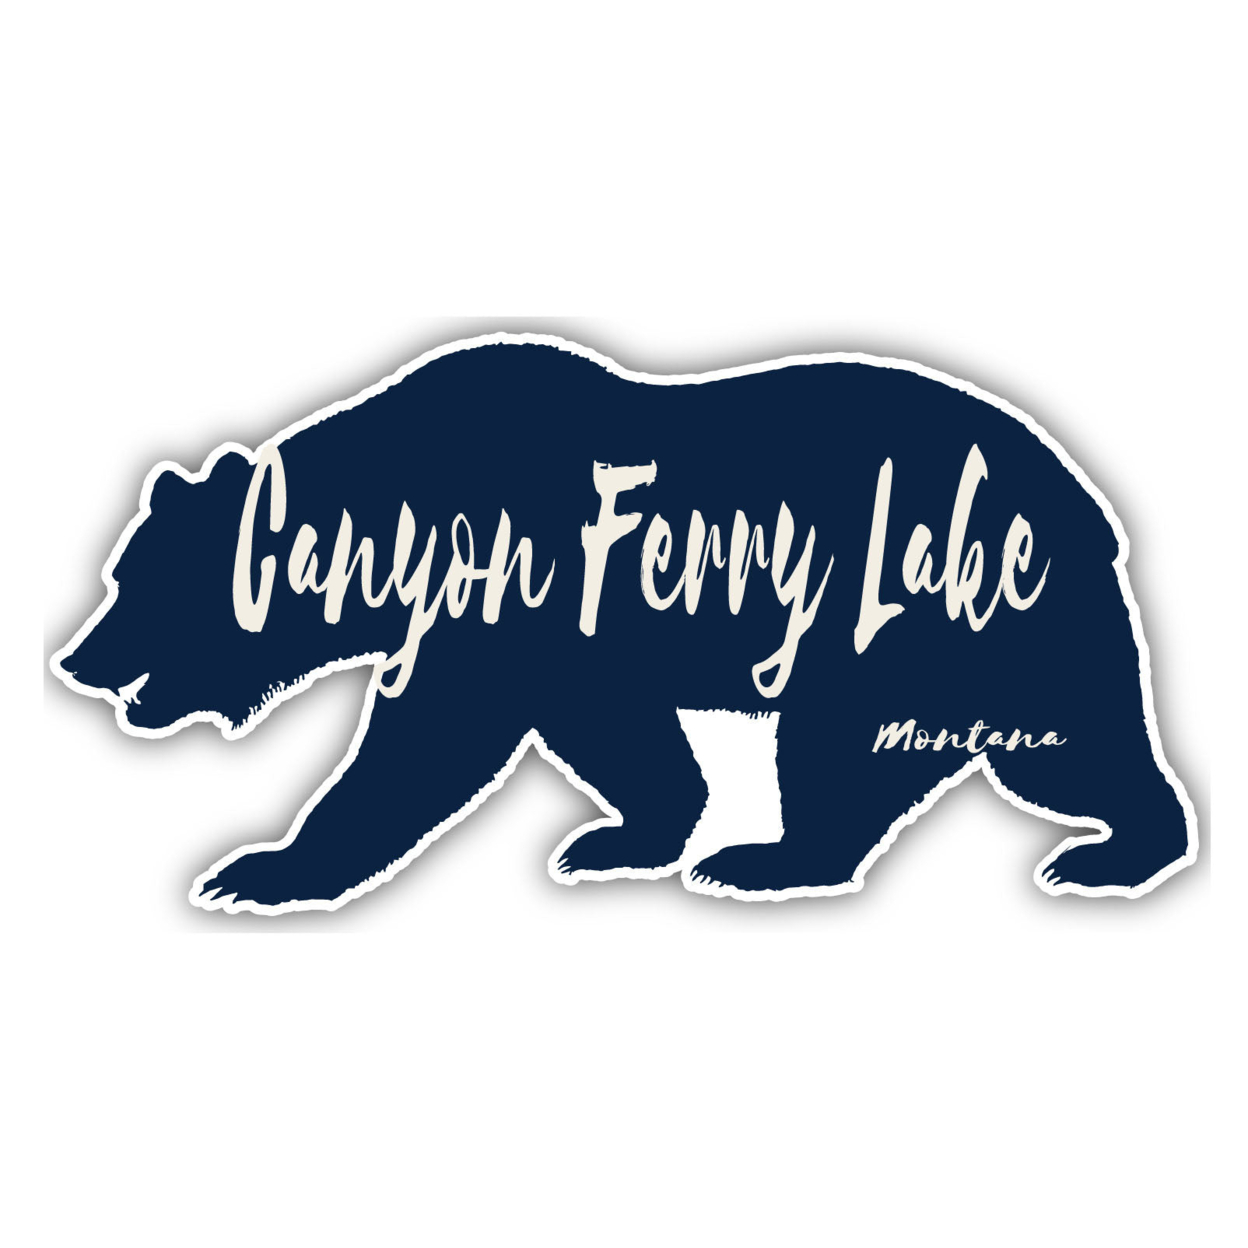 Canyon Ferry Lake Montana Souvenir Decorative Stickers (Choose Theme And Size) - 4-Pack, 12-Inch, Bear